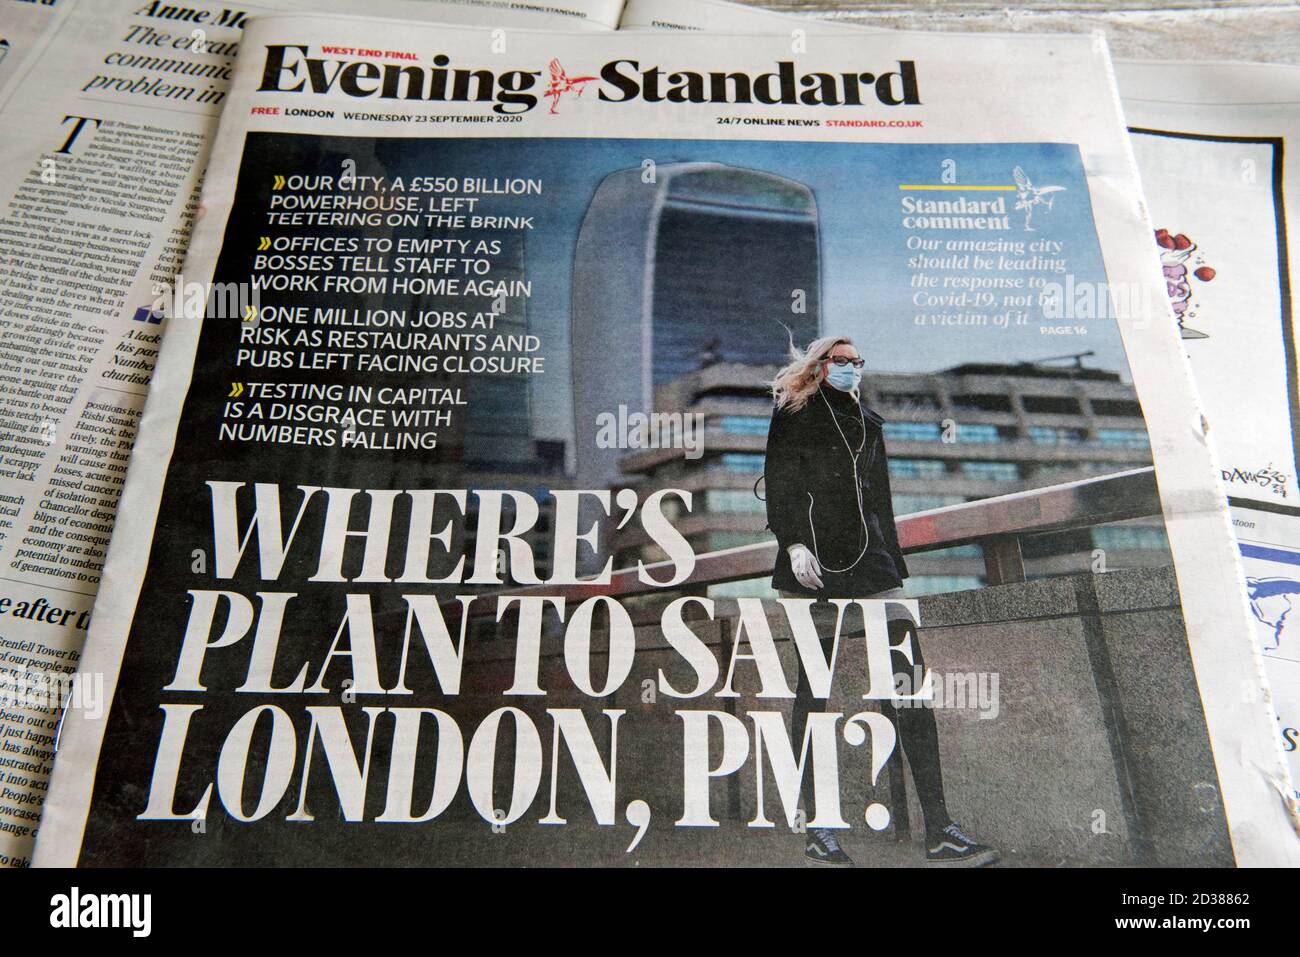 Evening Standard newspaper headline -  Where's the Plan to Save London, PM? - dated Wednesday 23rd September 2020.  Corvid19, Coronavirus Stock Photo